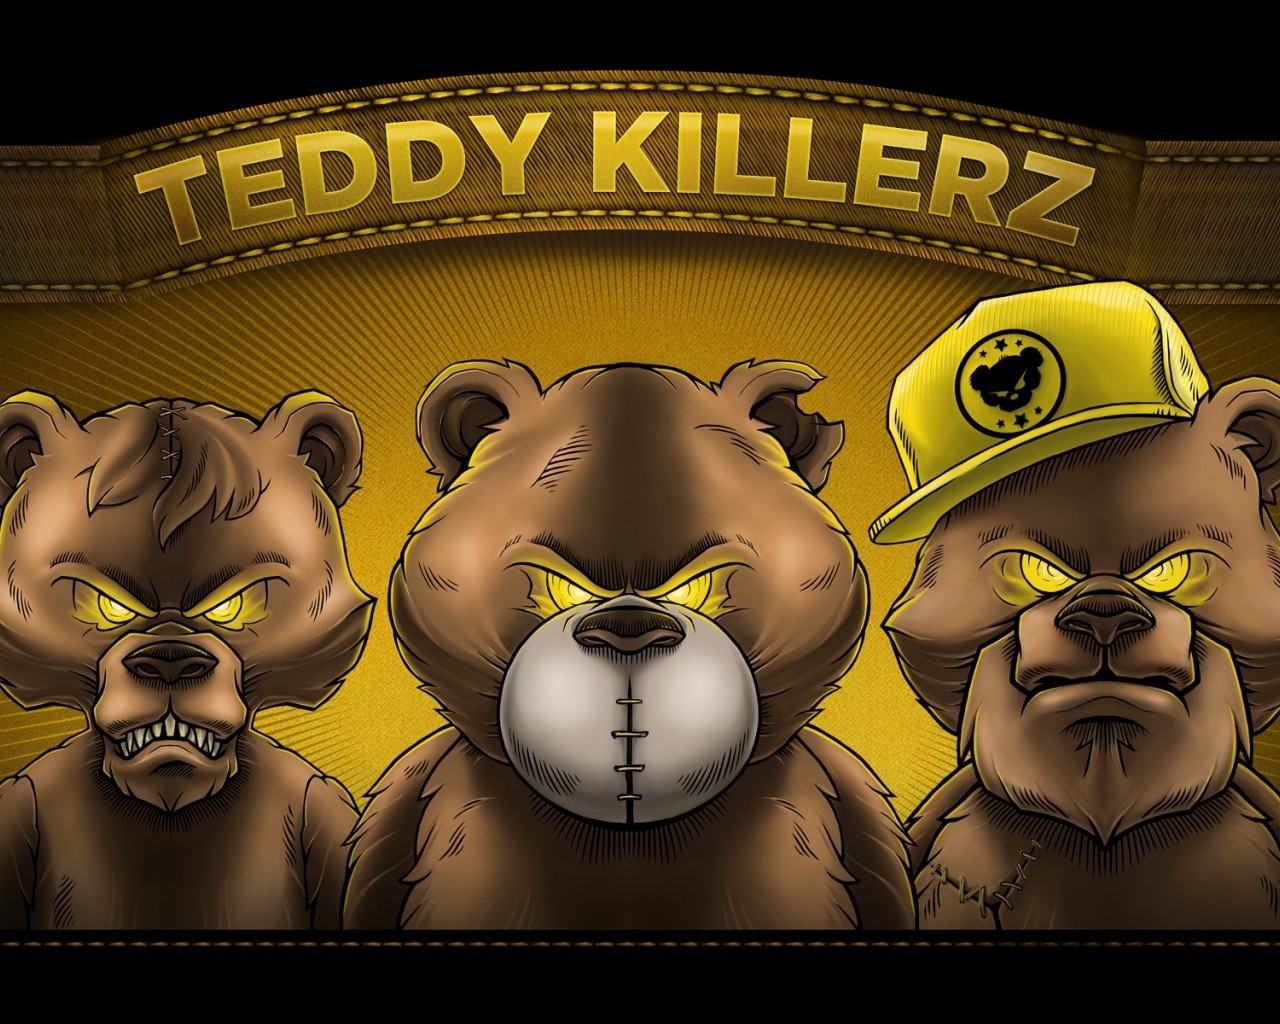 Teddy Killerz Poster for 1280 x 1024 resolution